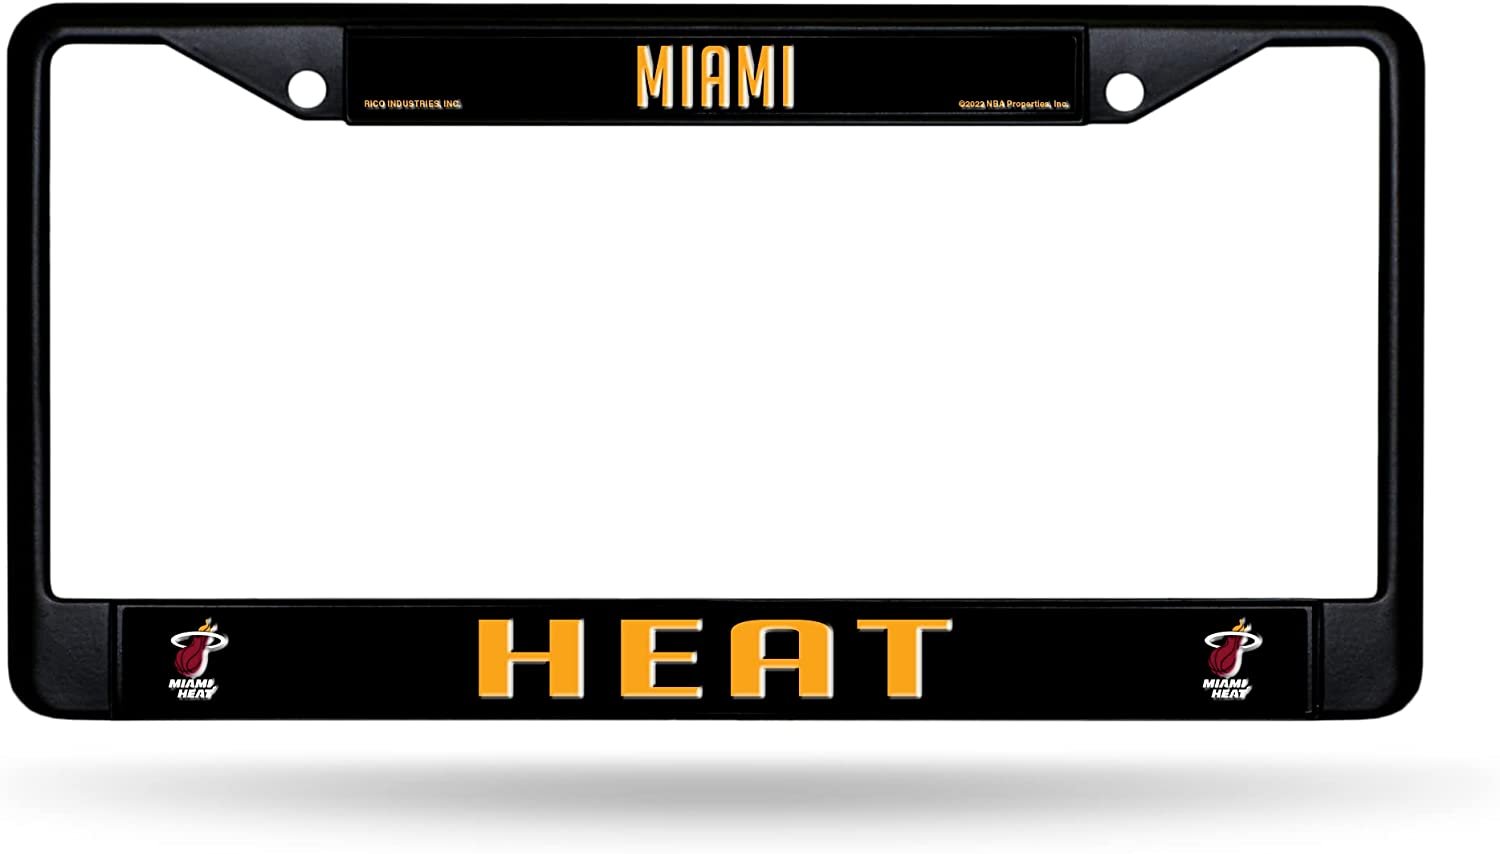 Miami Heat Black Metal License Plate Frame Chrome Tag Cover 6x12 Inch